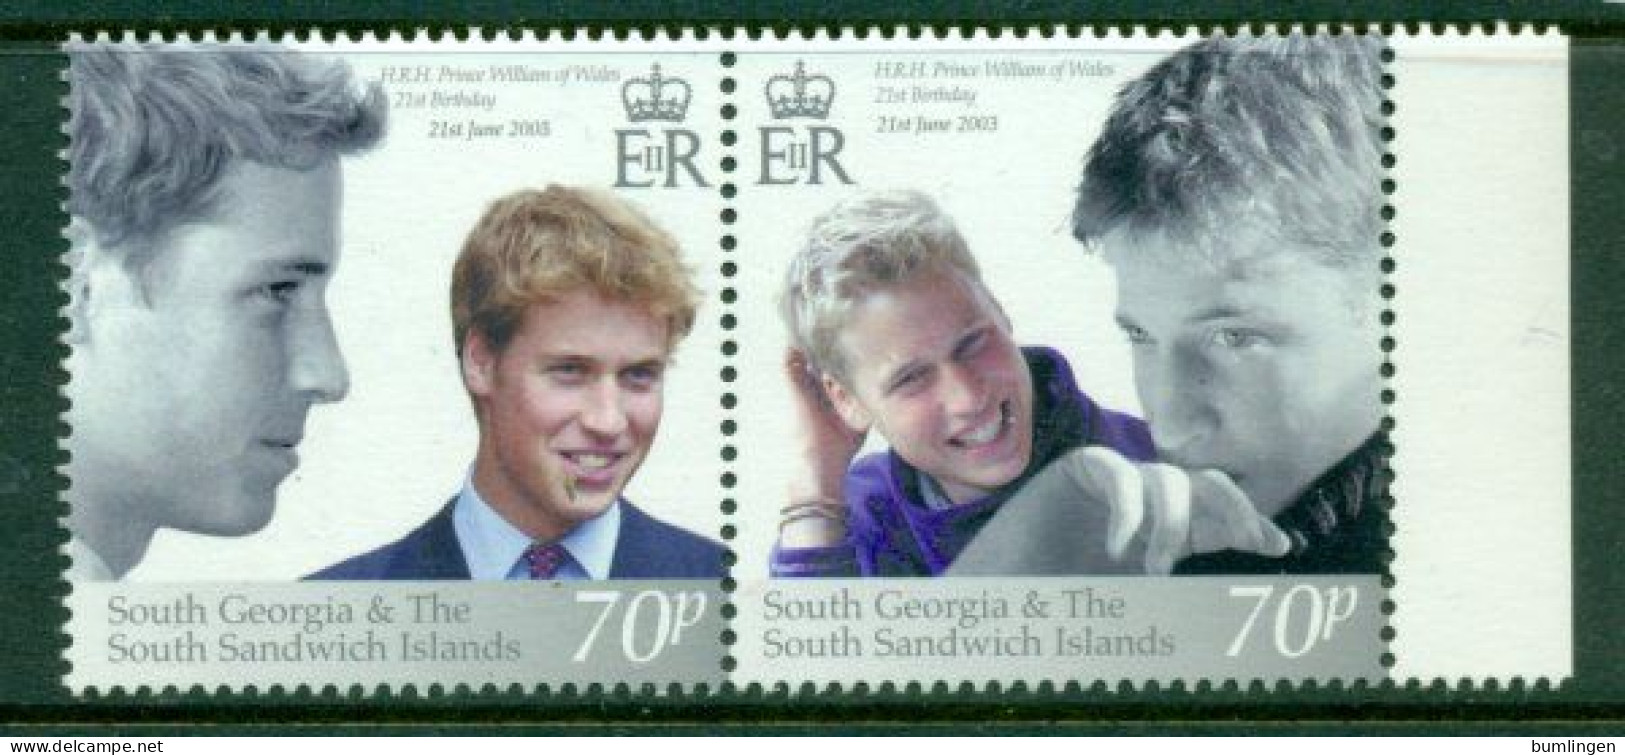 SOUTH GEORGIA & THE SOUTH SANDWICH ISLANDS 2003 Mi 362-63 Pair** 21st Anniversary Of Prince William [B703] - Royalties, Royals